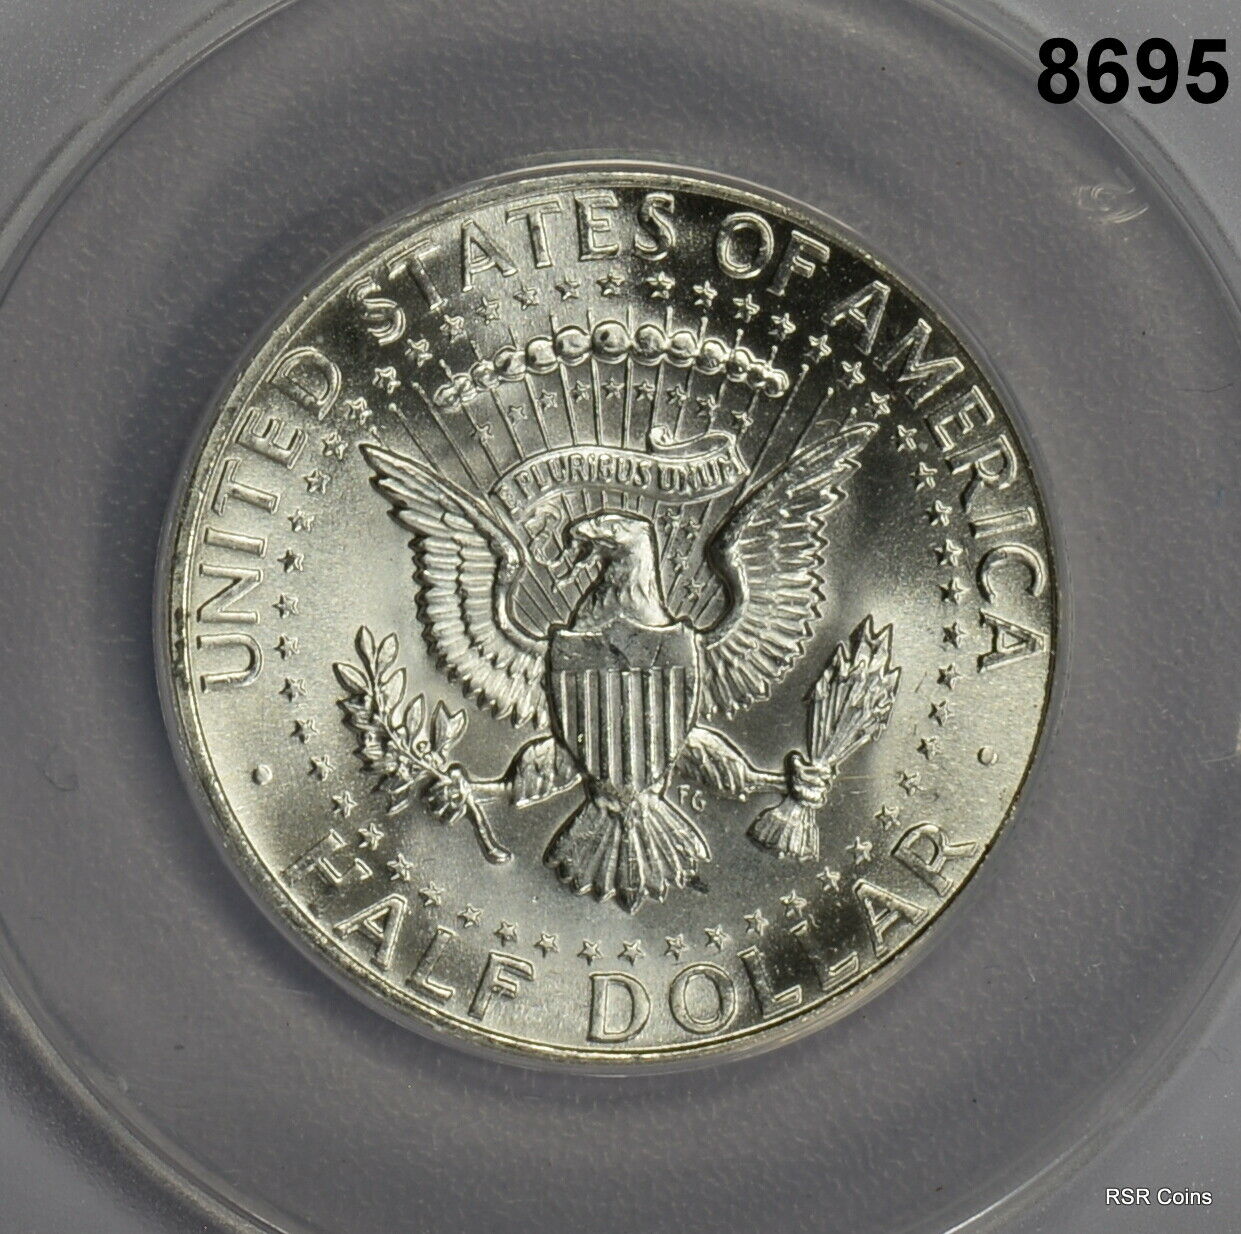 1964 KENNEDY HALF DOLLAR ANACS CERTIFIED MS67 ULTRA RARE BRILLIANT GEM! #8695